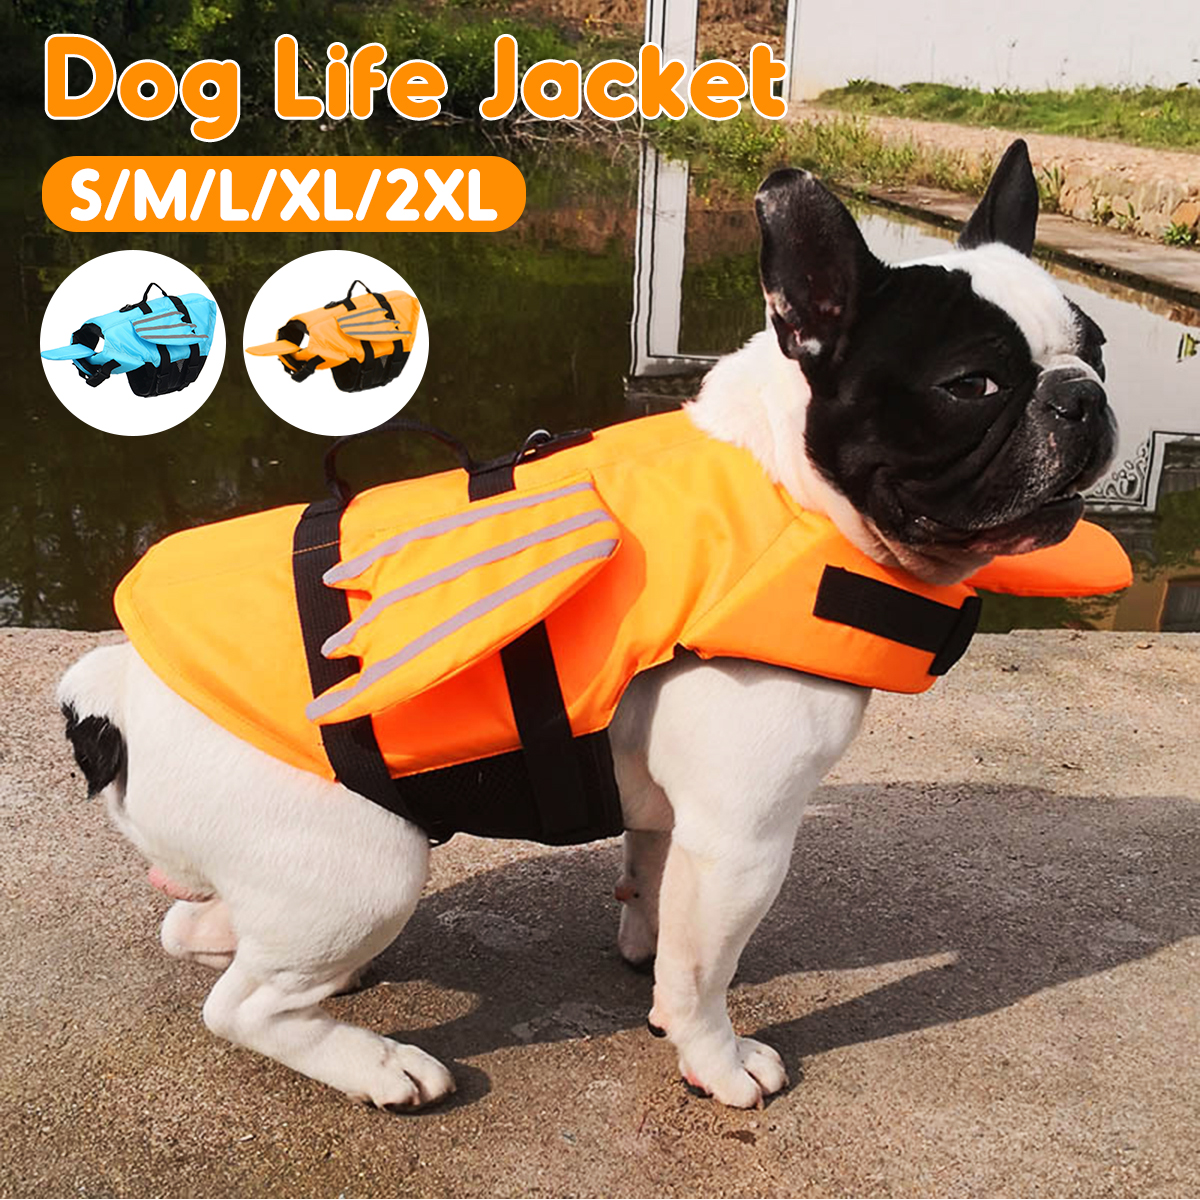 Dog-Life-Jacket-Pet-Safety-Life-Vests-Buoyancy-Aid-Float-Reflective-Swimming-Safety-Dog-Vest-1724851-1